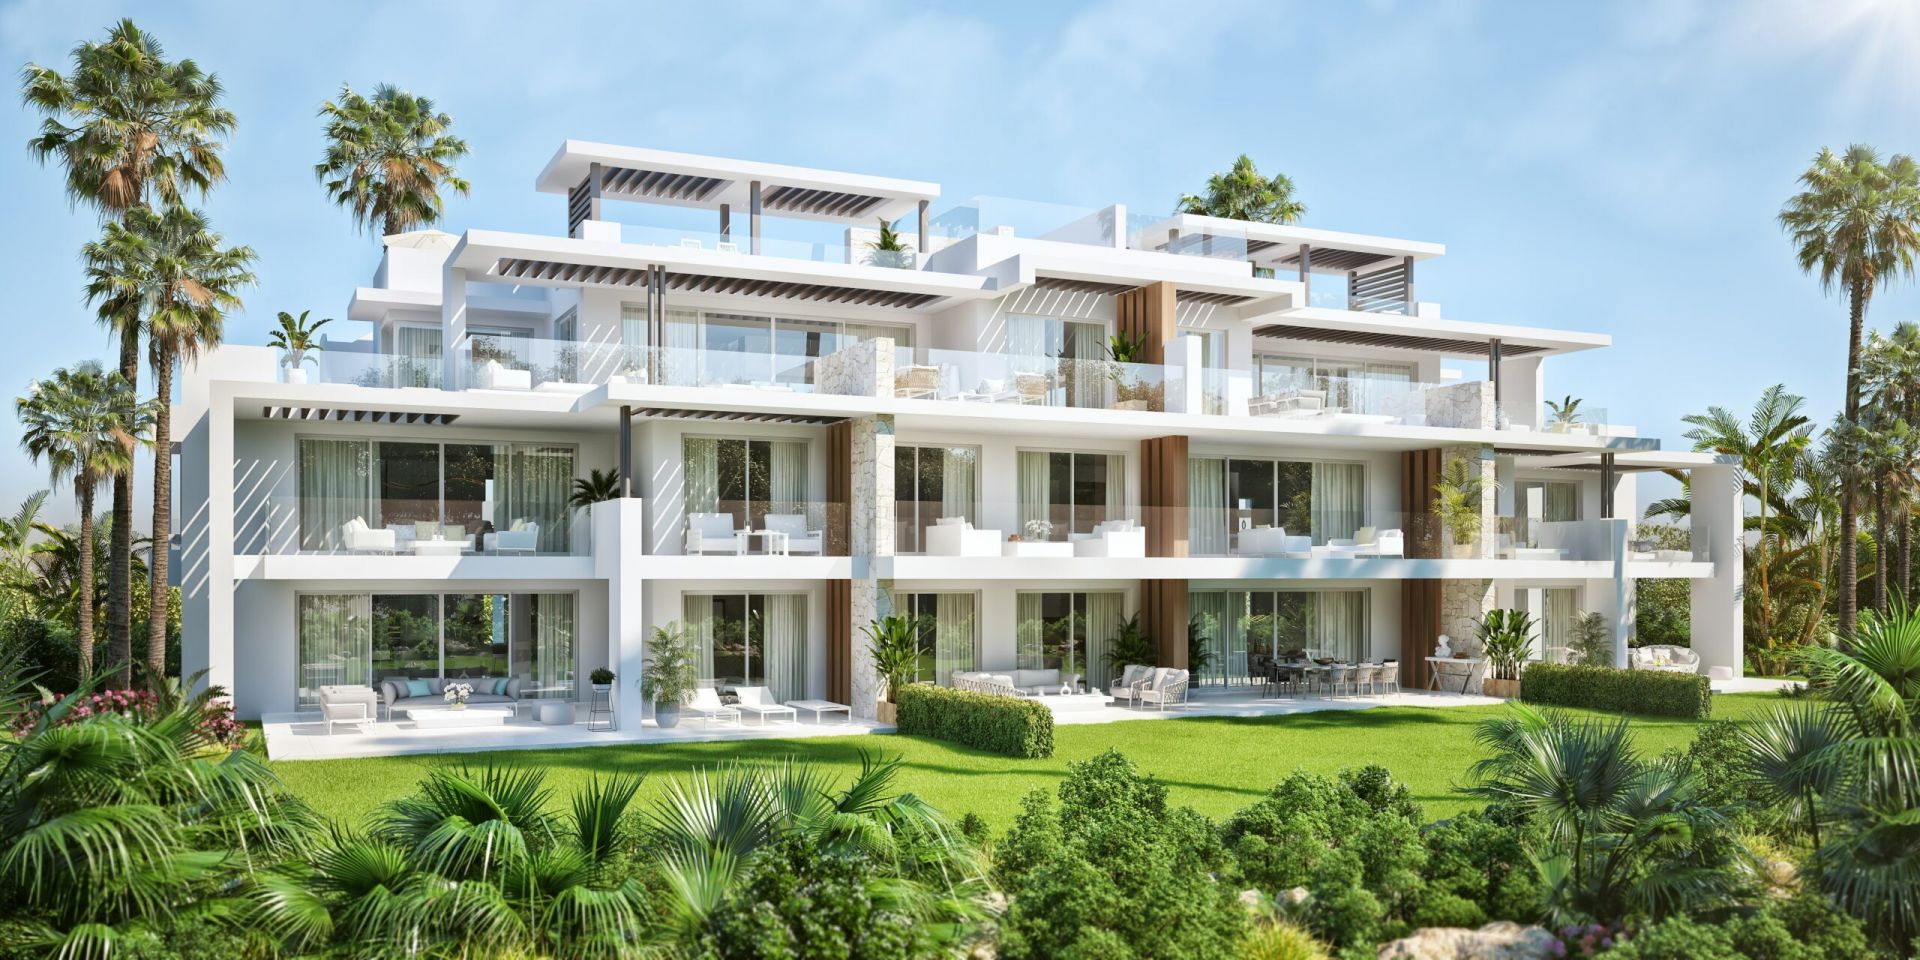 Large 2 bedroom apartment with panoramic views | Engel & Völkers Marbella